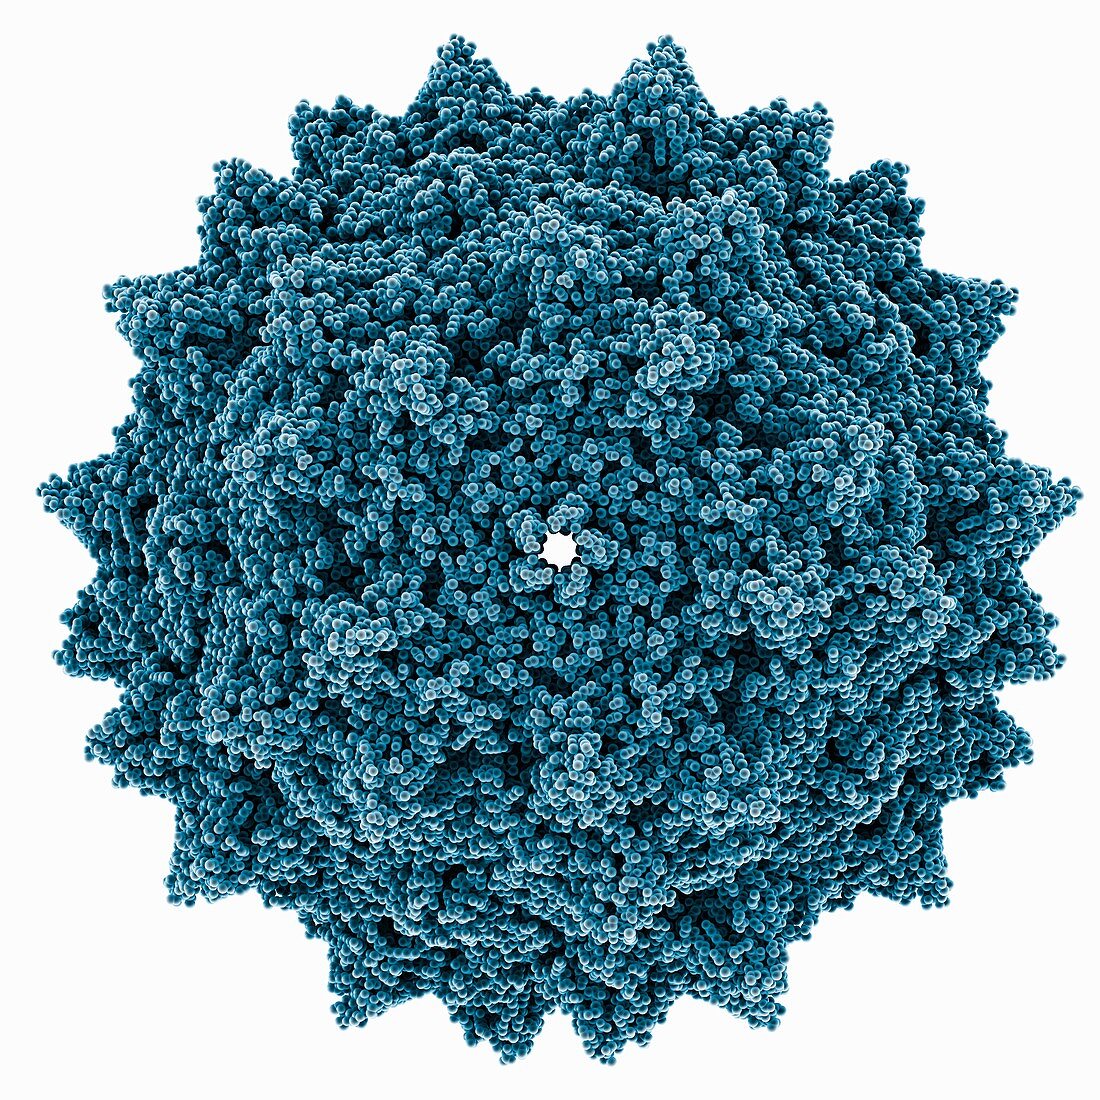 Adeno-associated virus type 2 capsid, molecular model